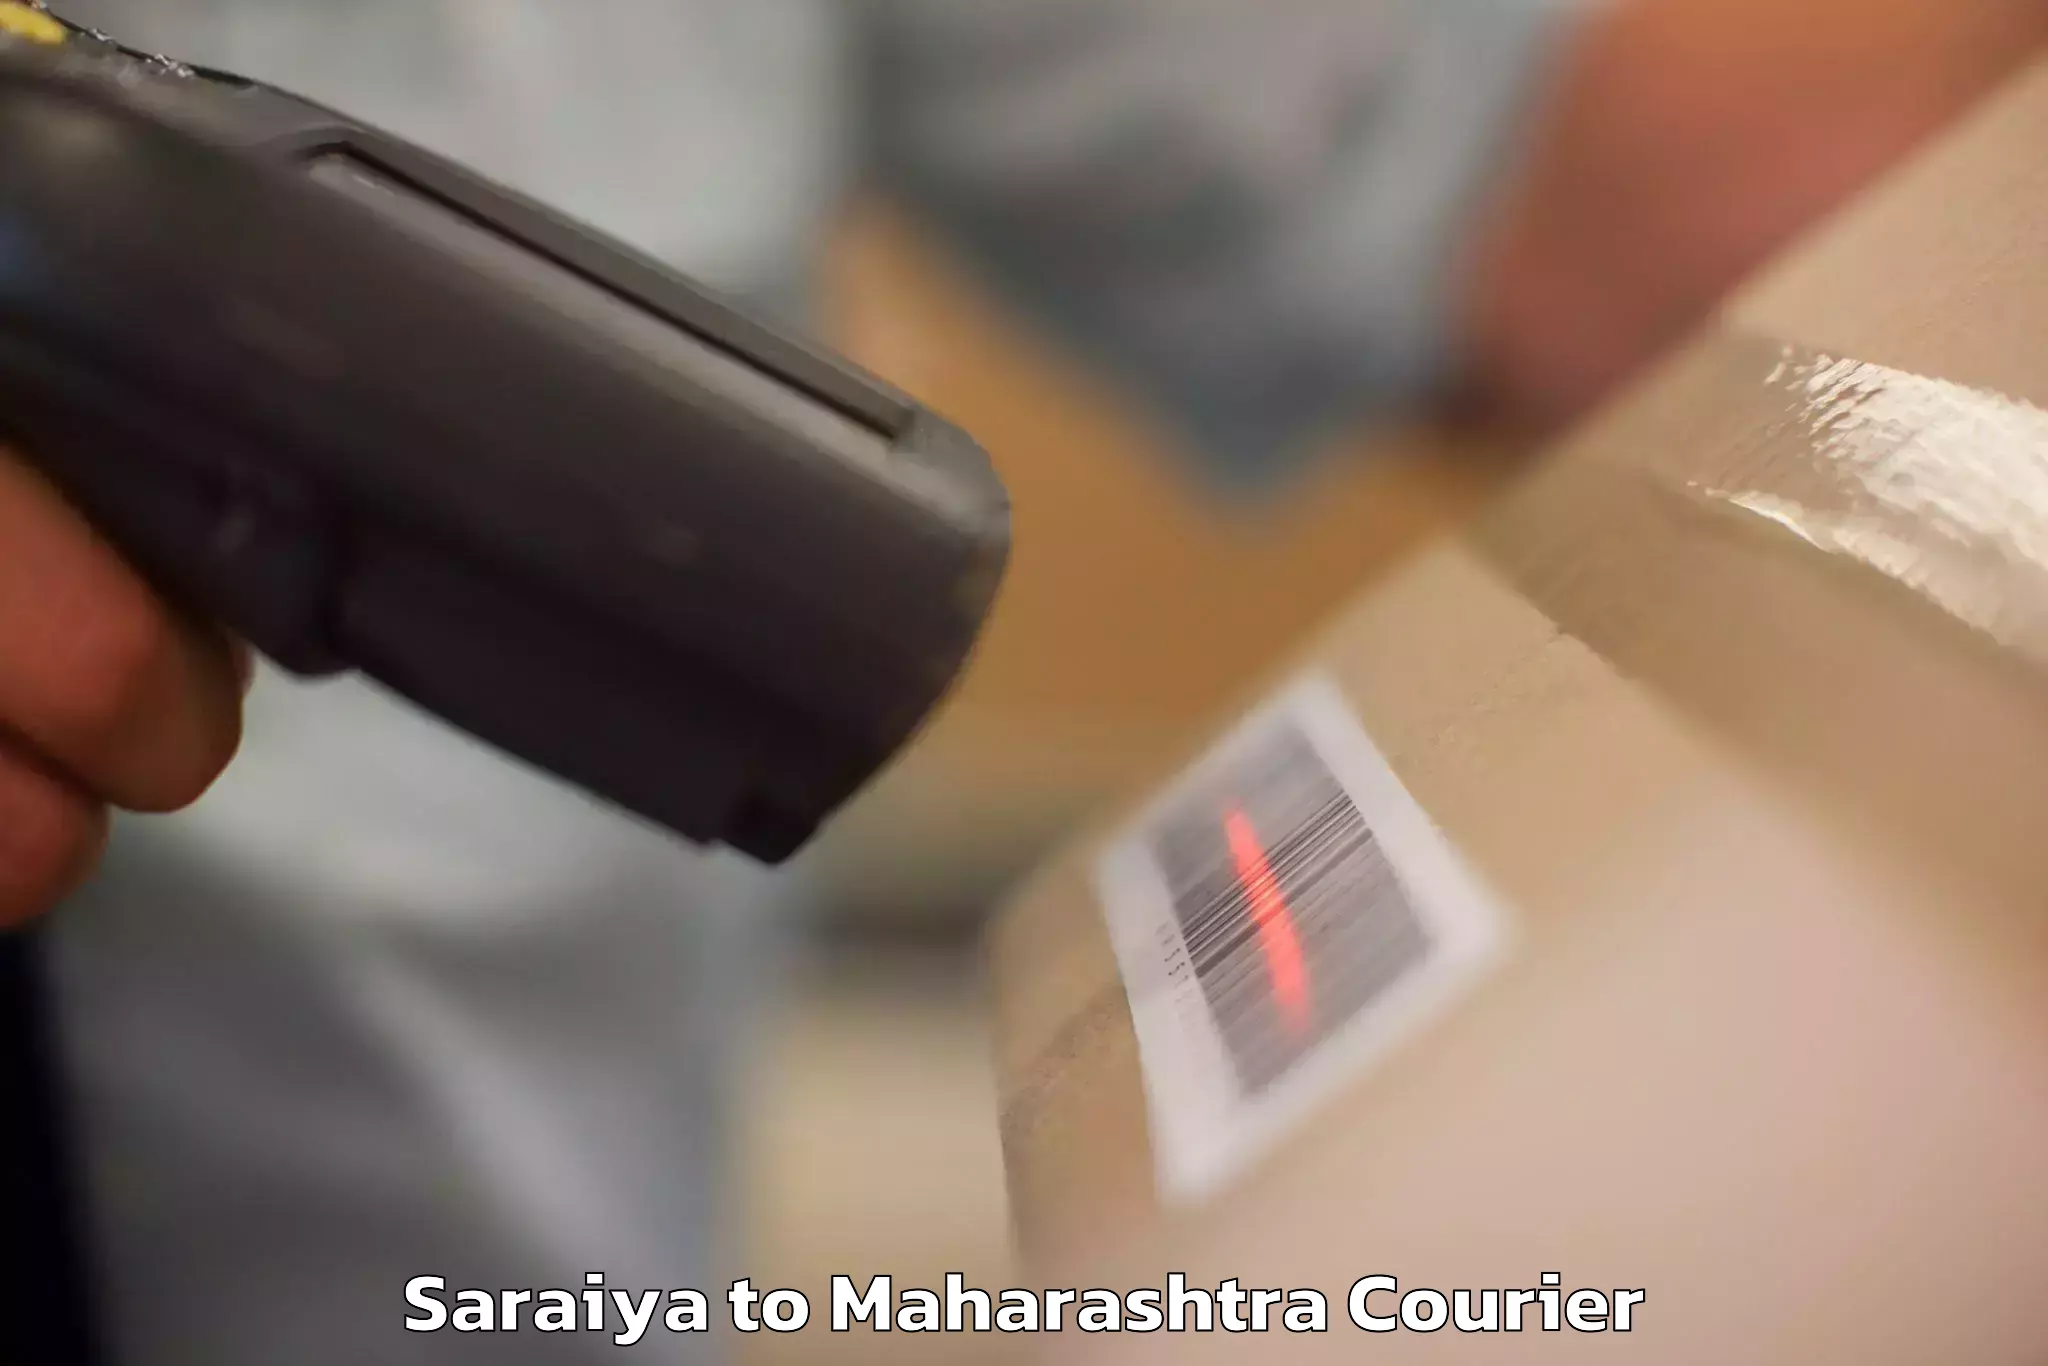 Personal effects shipping Saraiya to Khandala Pune